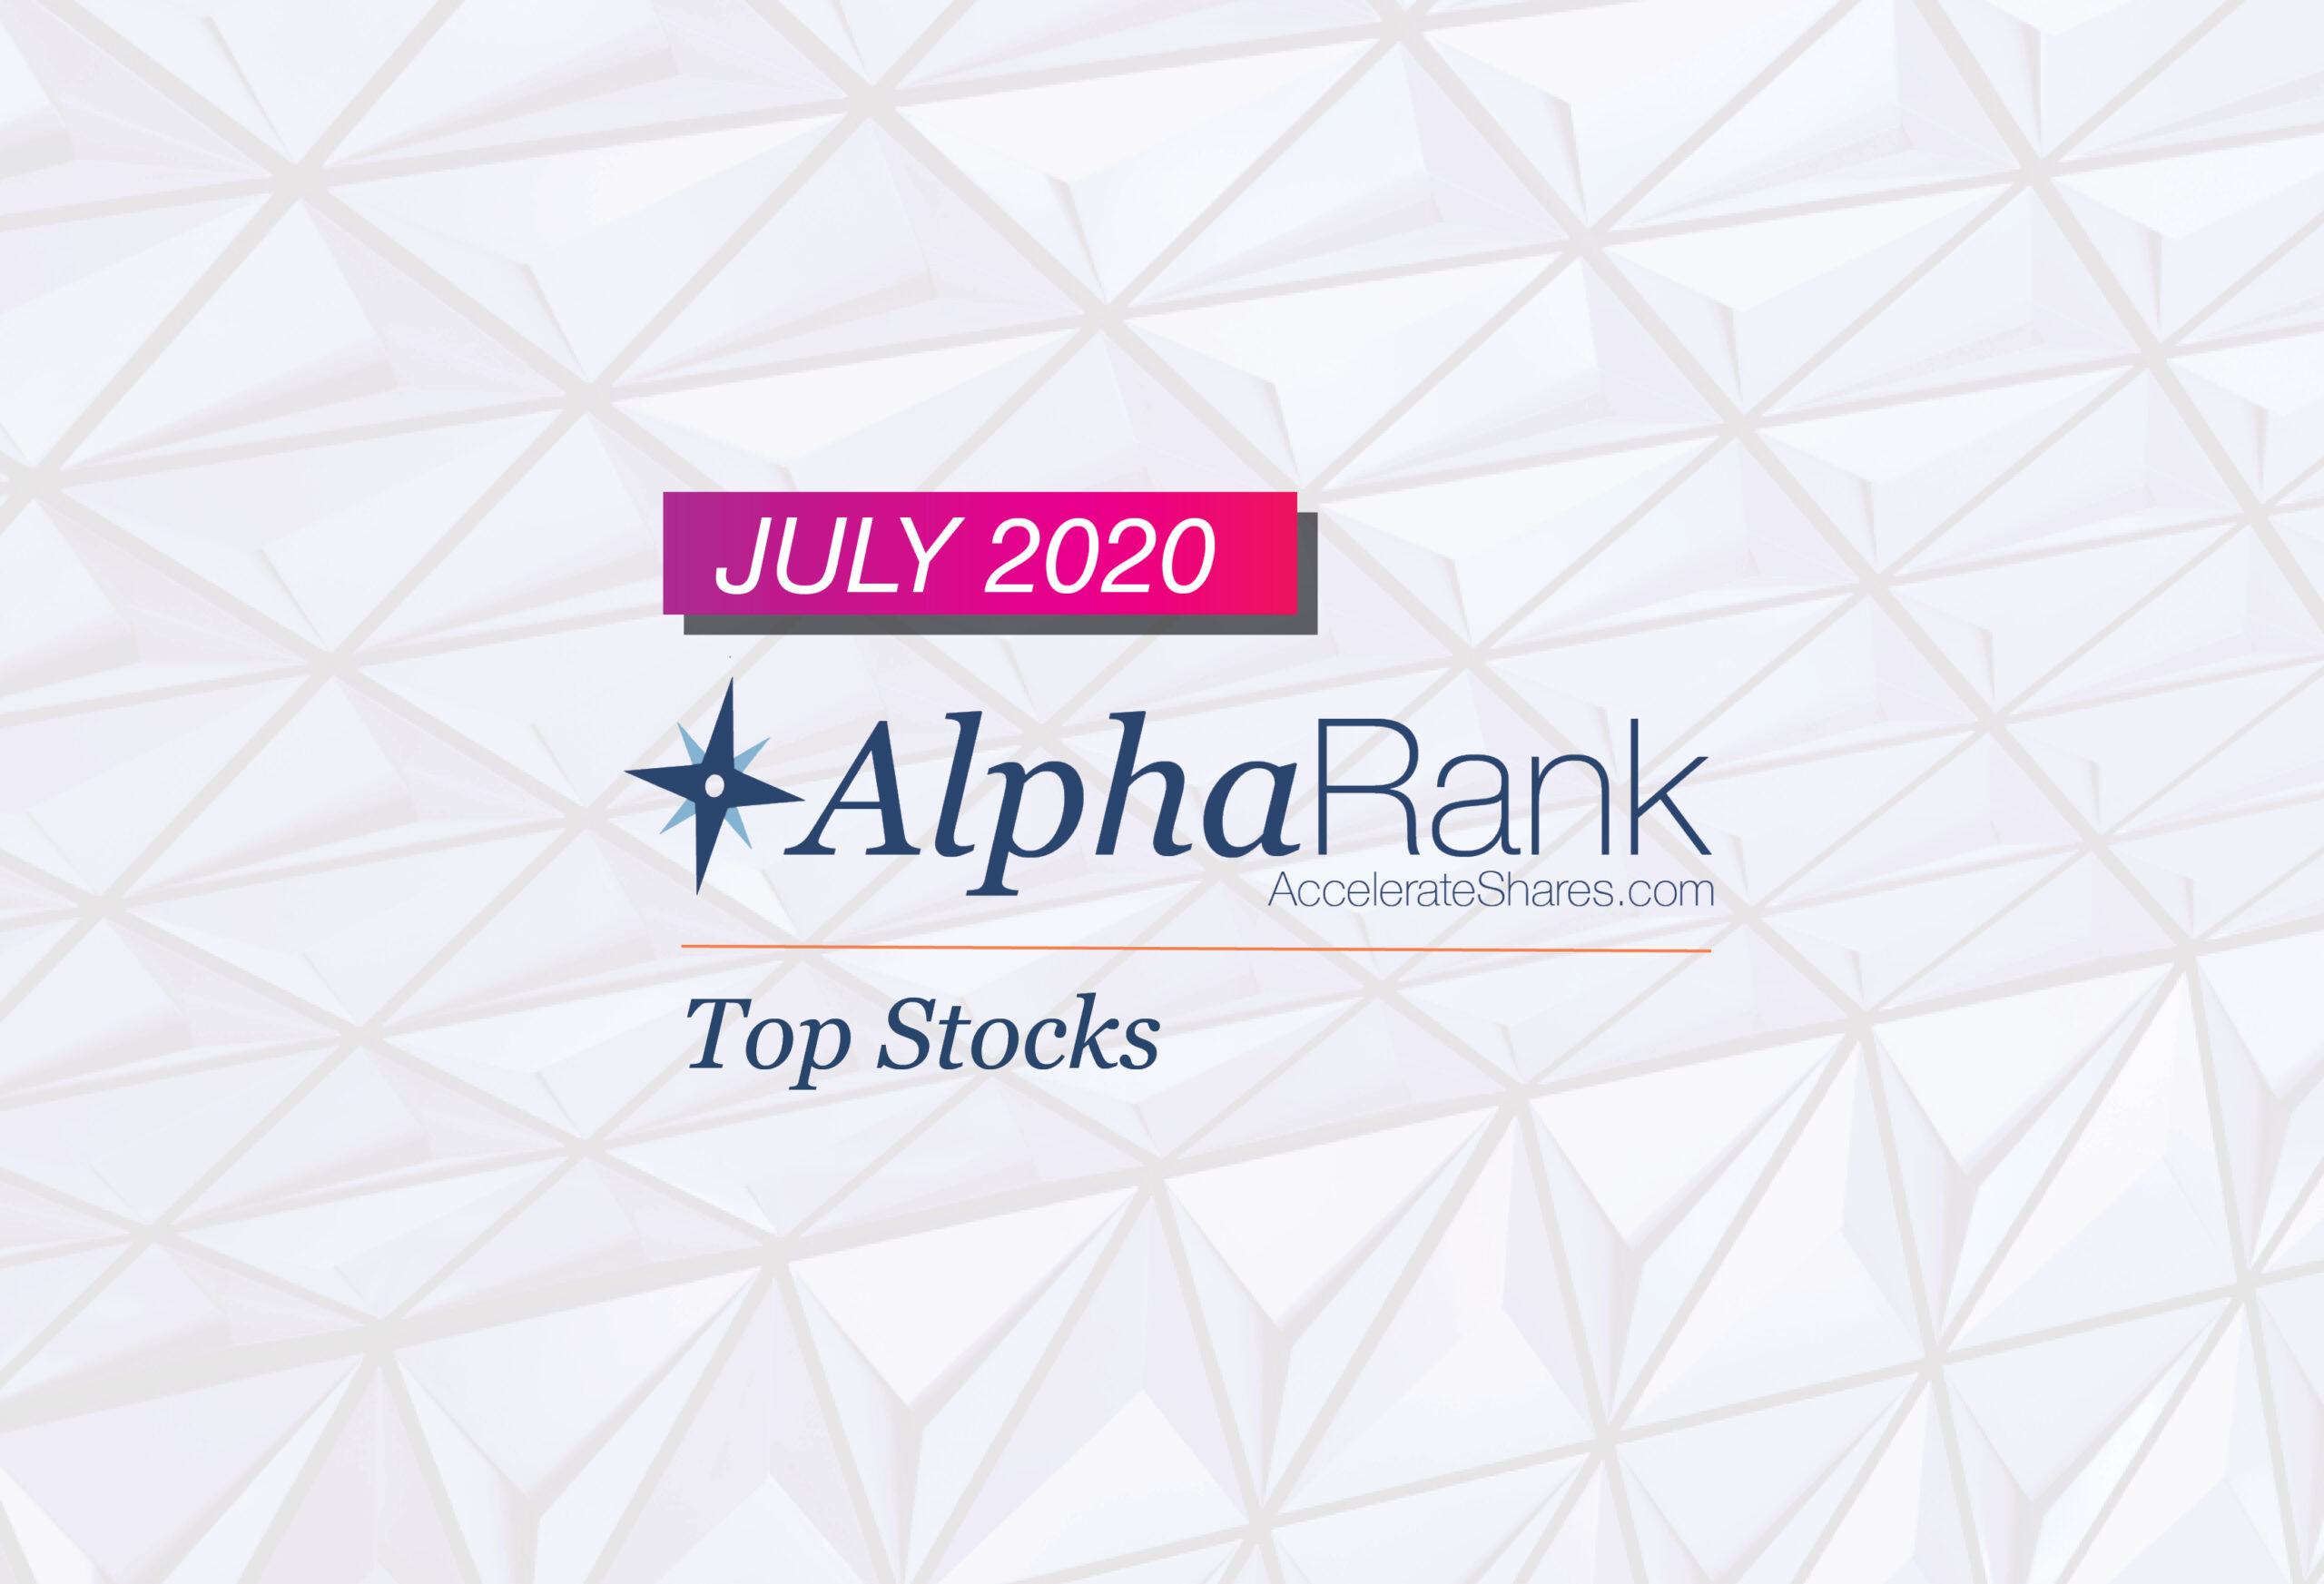 AlphaRank Top Stocks—July 2020